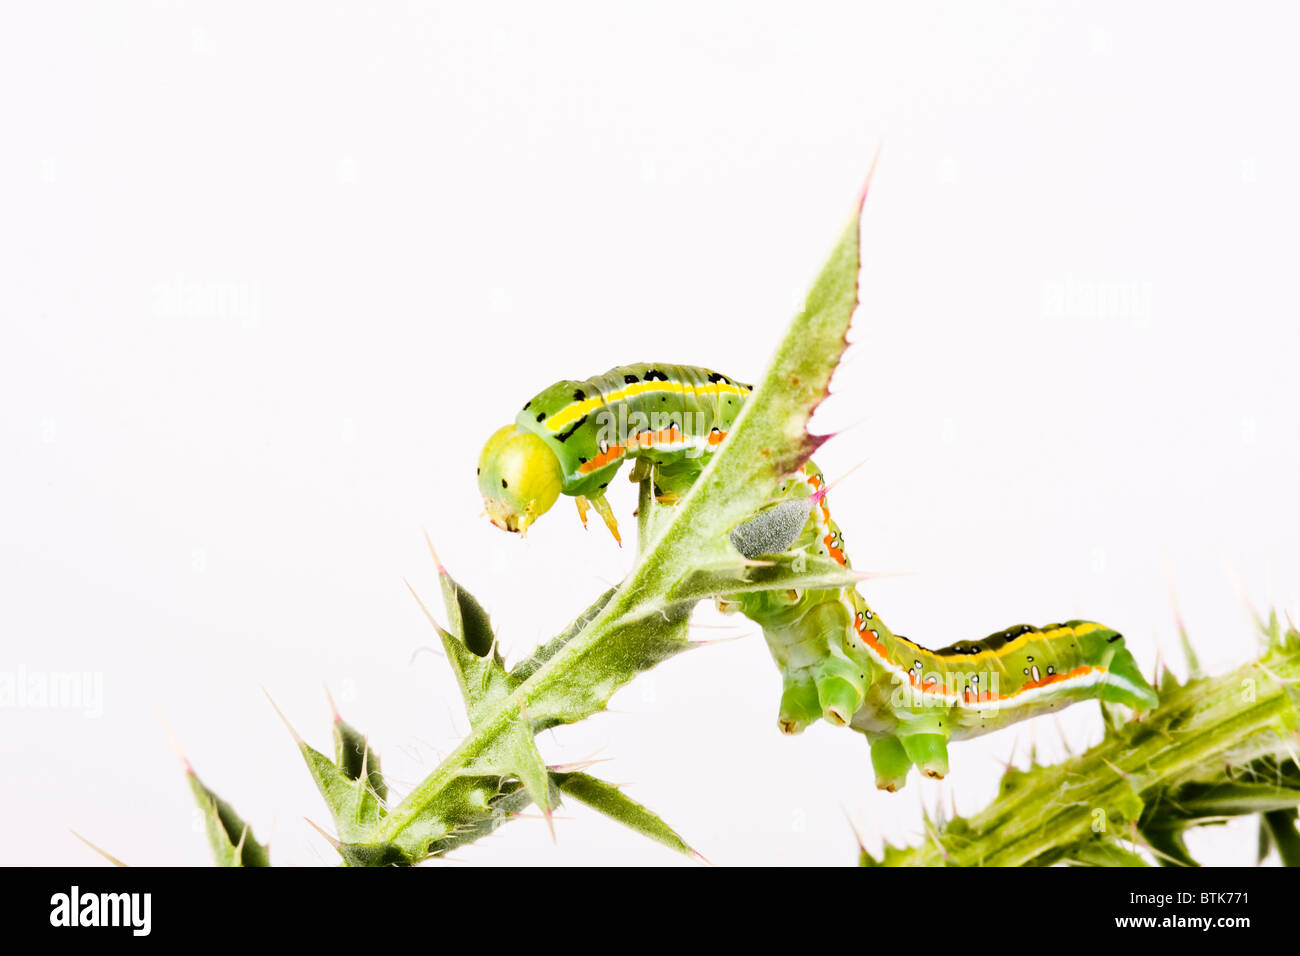 Caterpillar of a sword-grass (Xylena exsoleta) Stock Photo